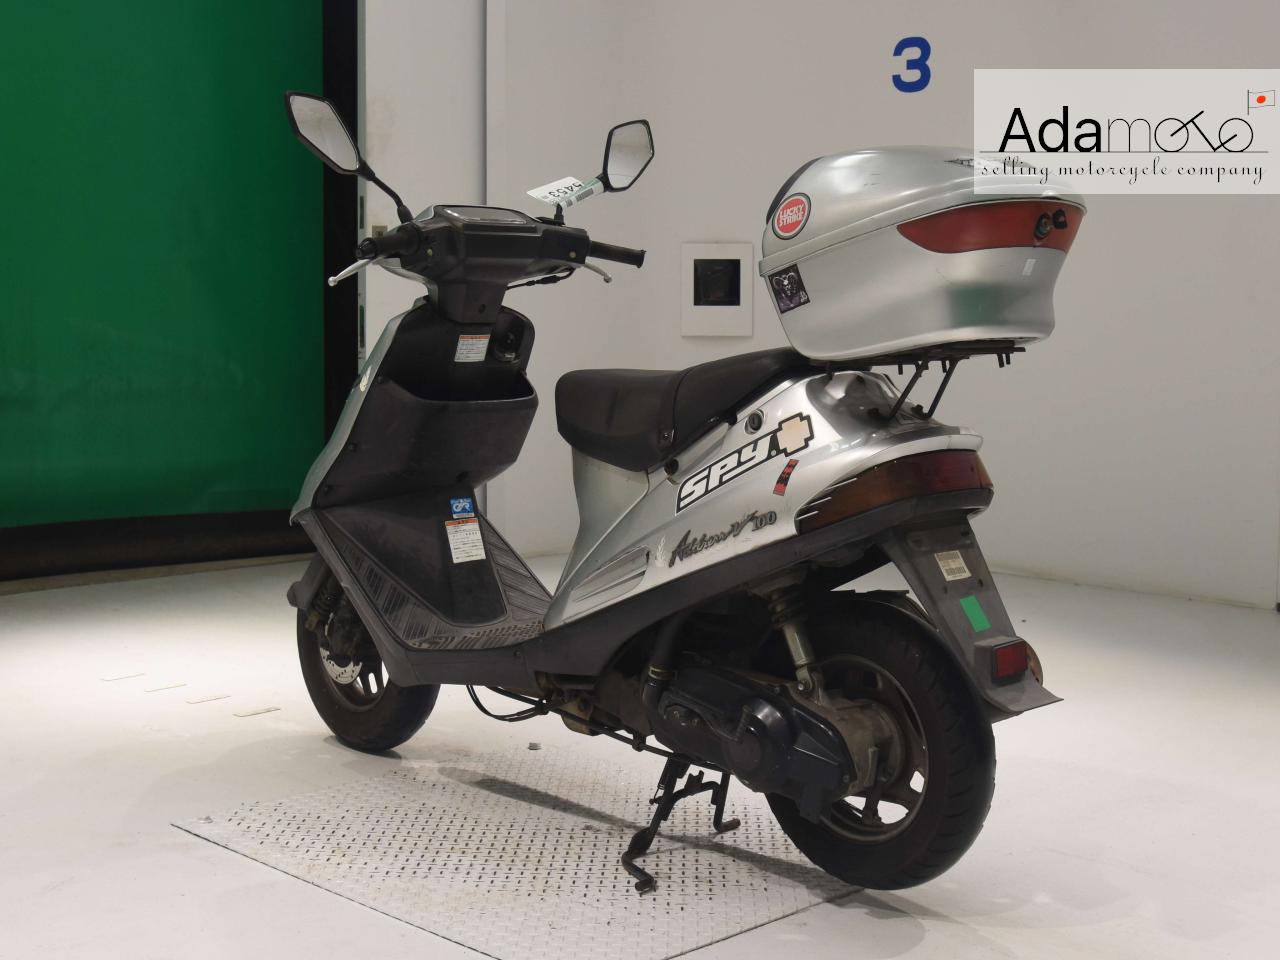 Suzuki ADDRESS V100 - Adamoto - Motorcycles from Japan